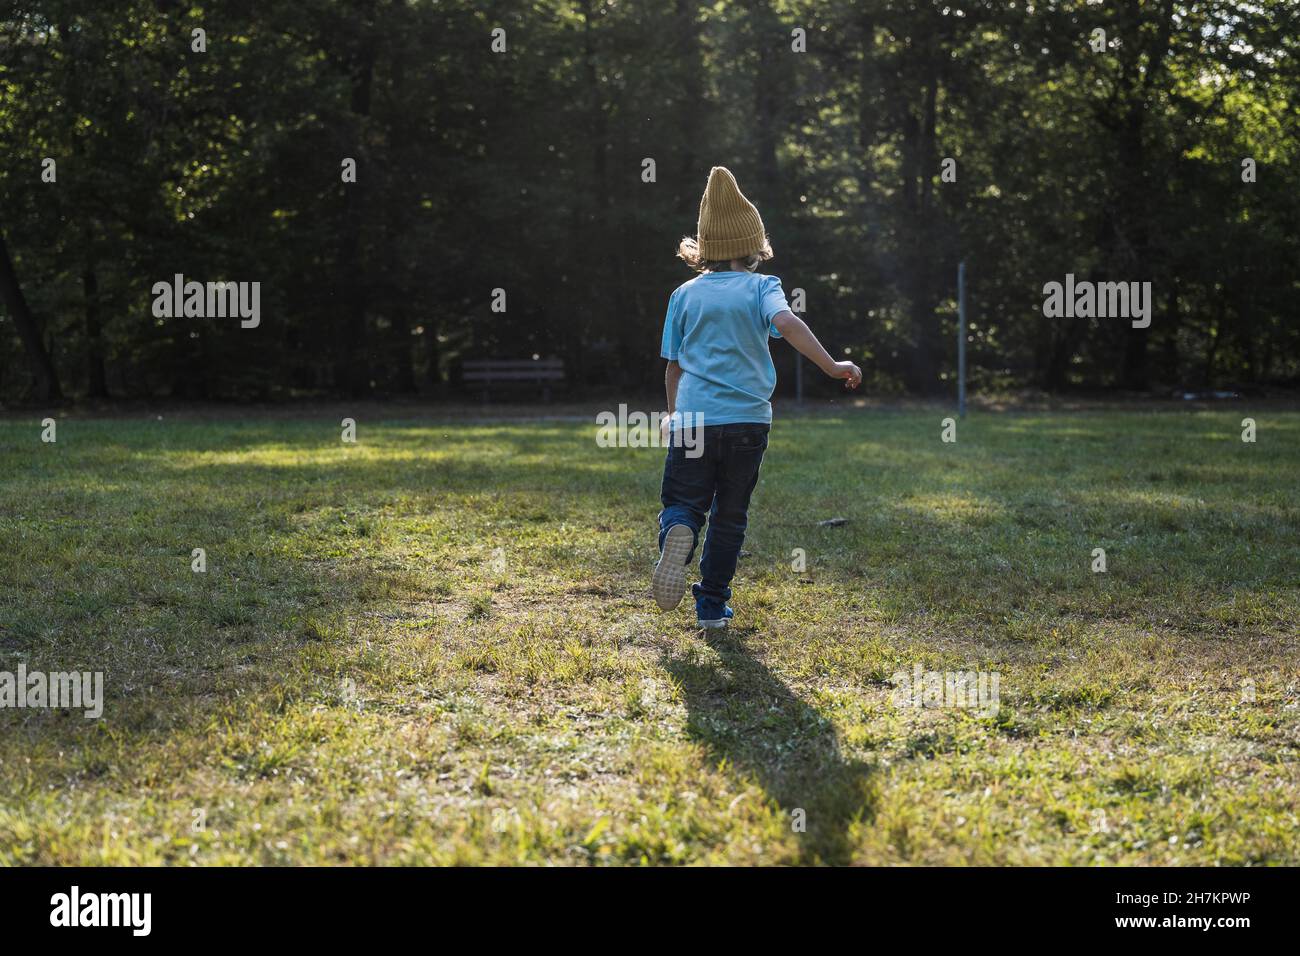 Boy wearing knit hat running on grass Stock Photo